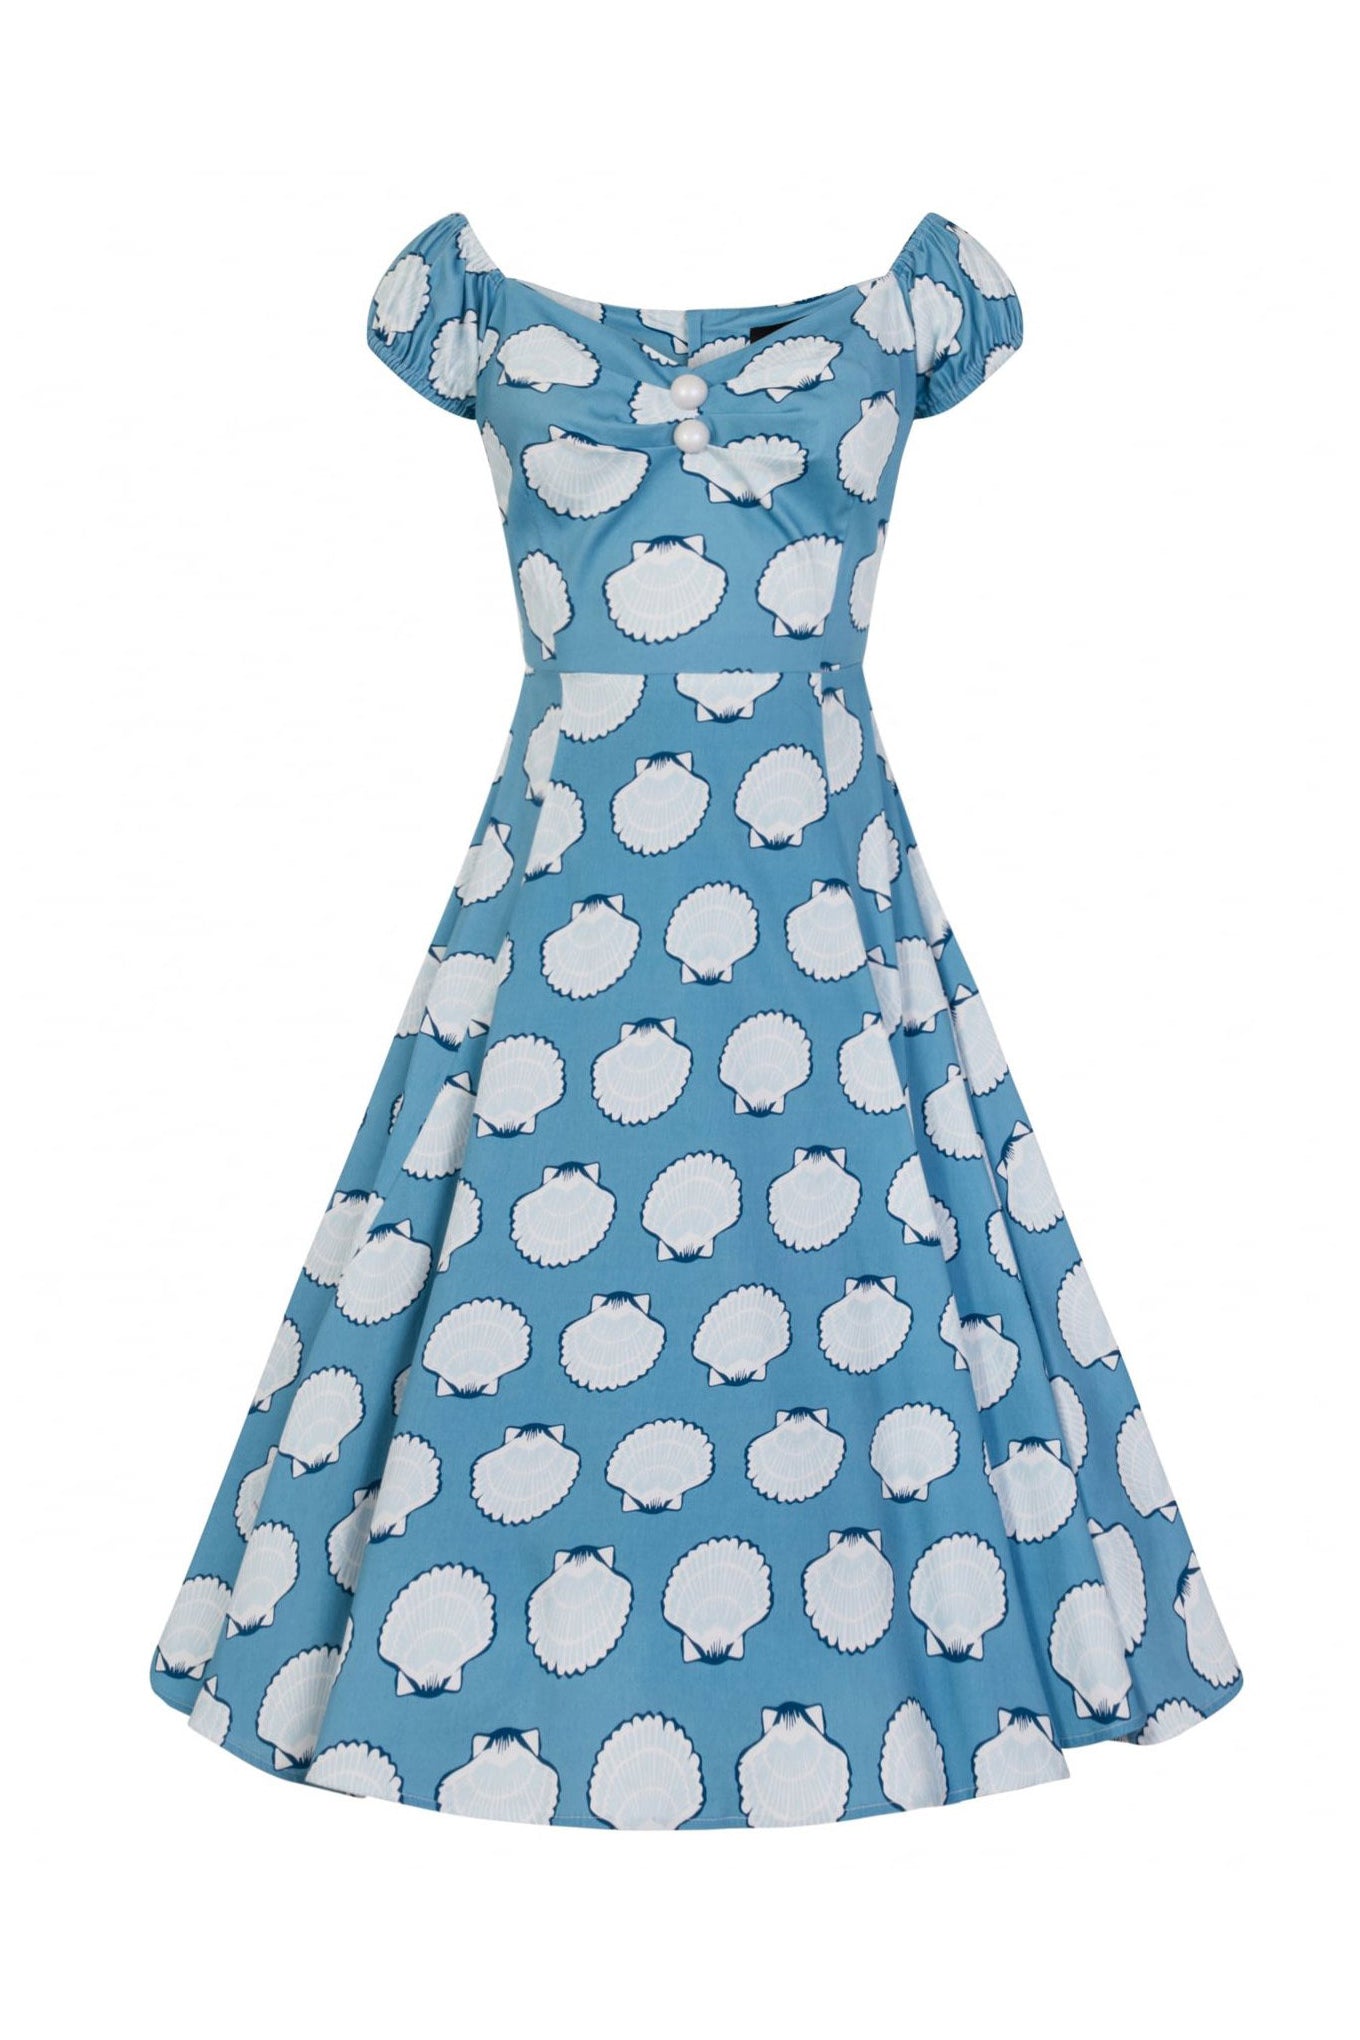 Collectif Sky Blue Seashell Print Sweetheart Neckline 50s Swing Dress - Pretty Kitty Fashion